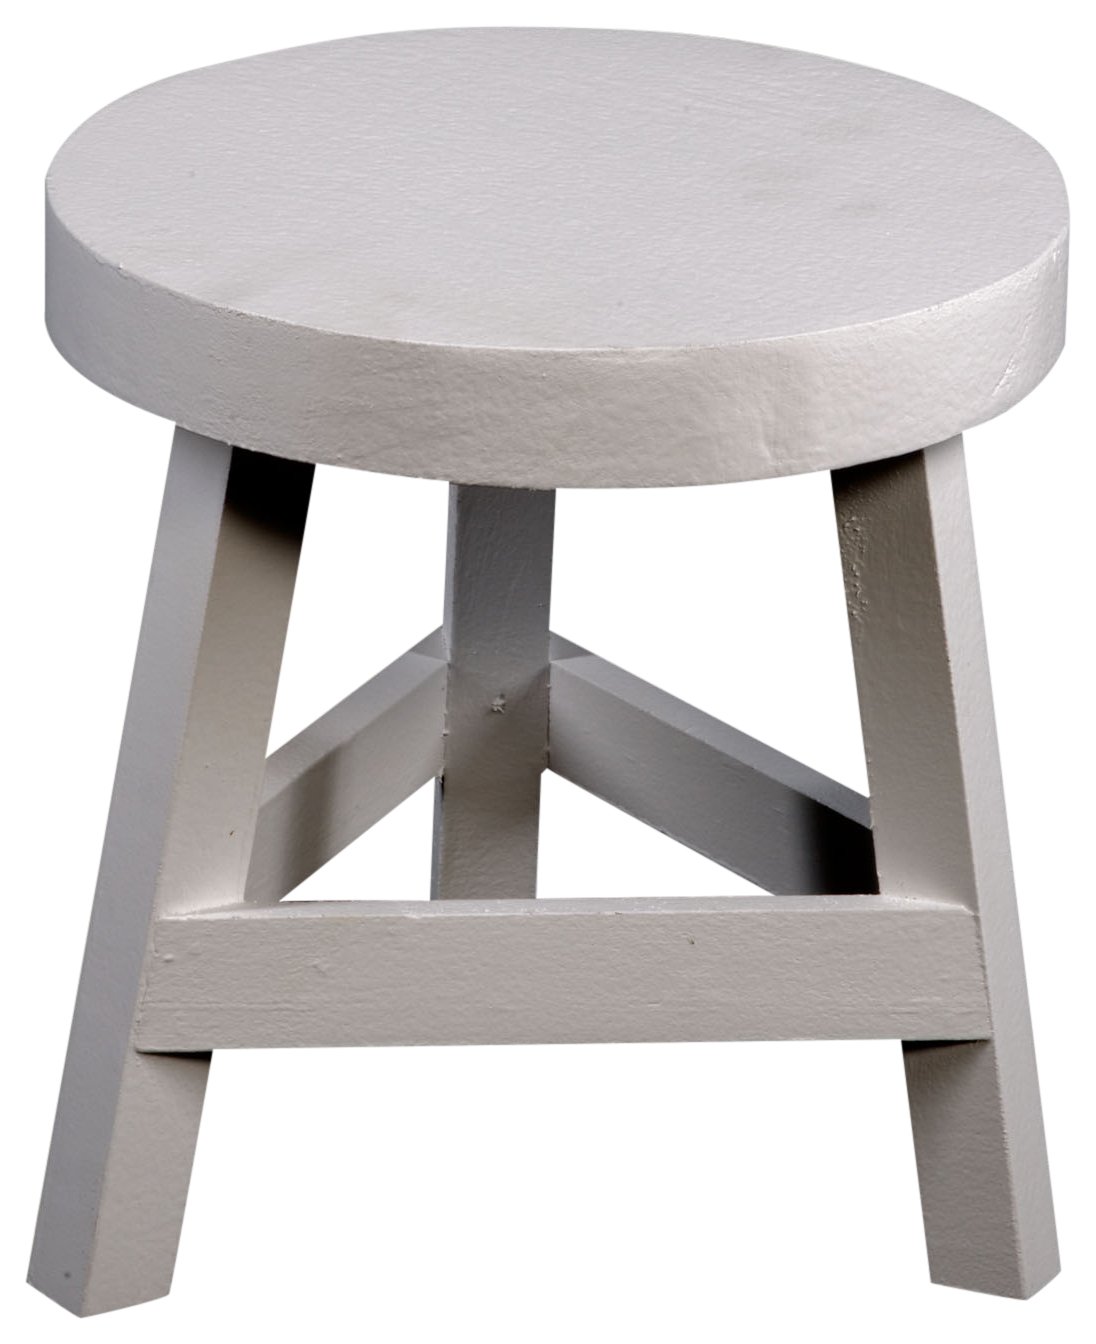 The Transition Group Advisory Services three legged stool image